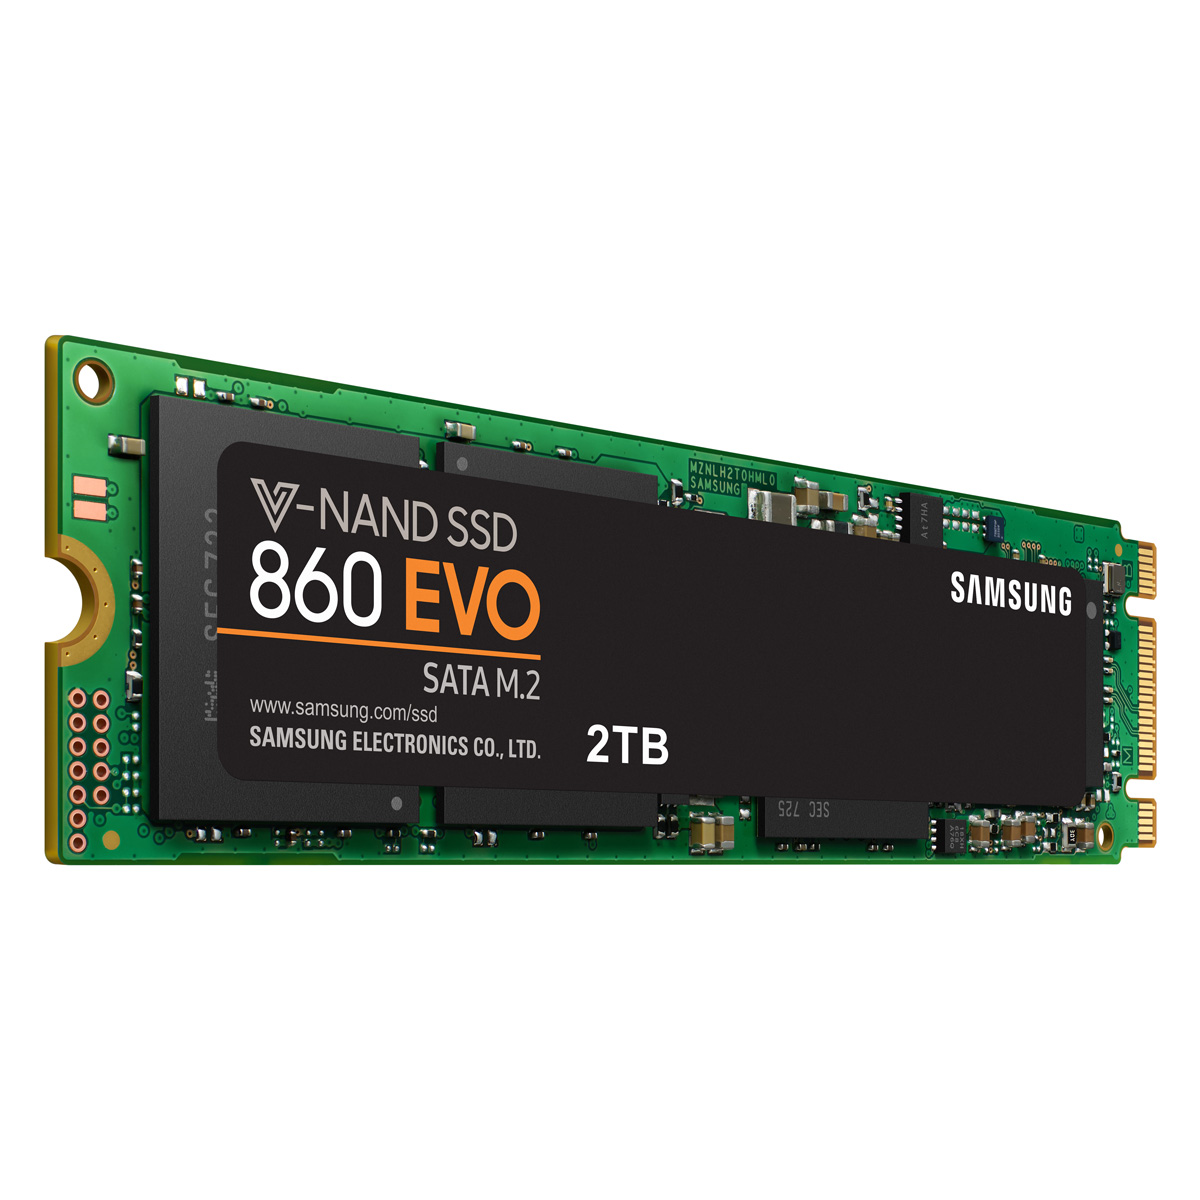 SAMSUNG V-NAND SSD 860EVO 250GB 2 枚